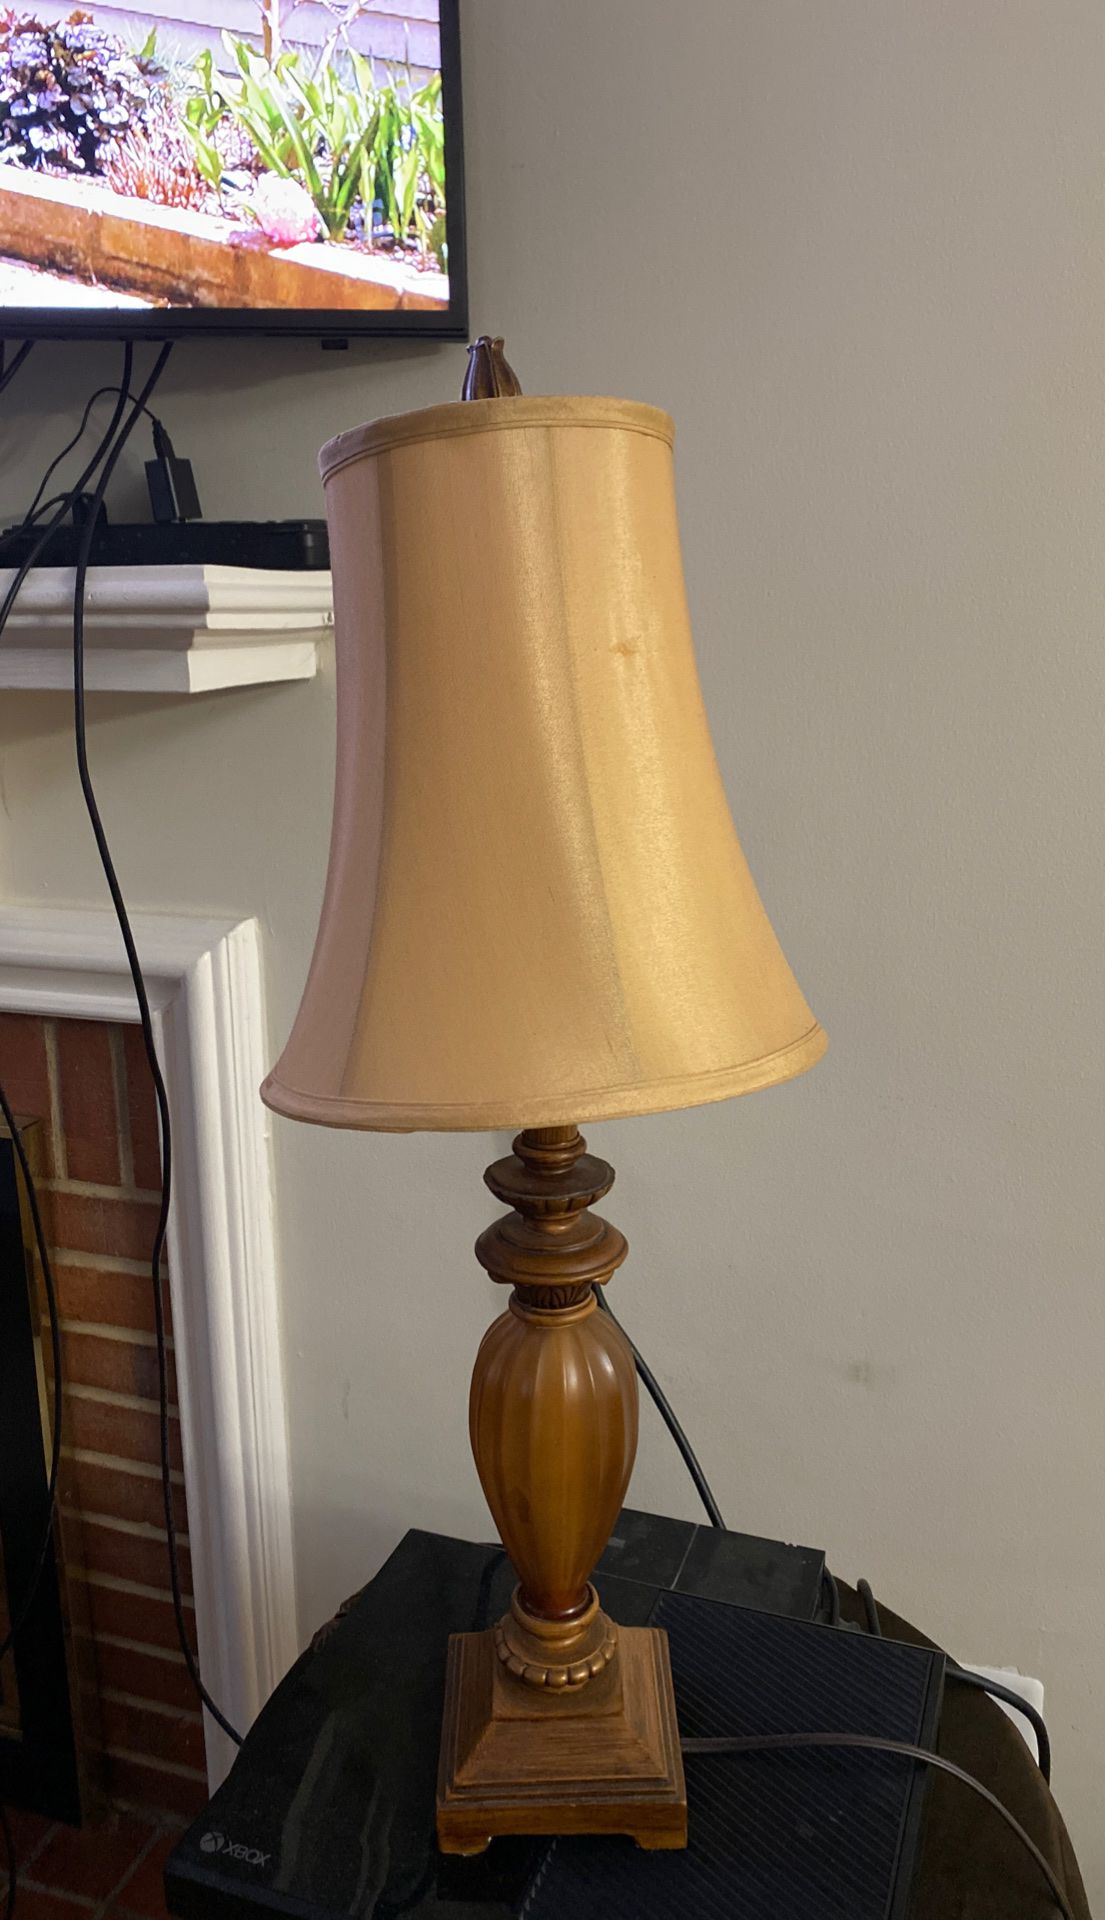 Working lamp